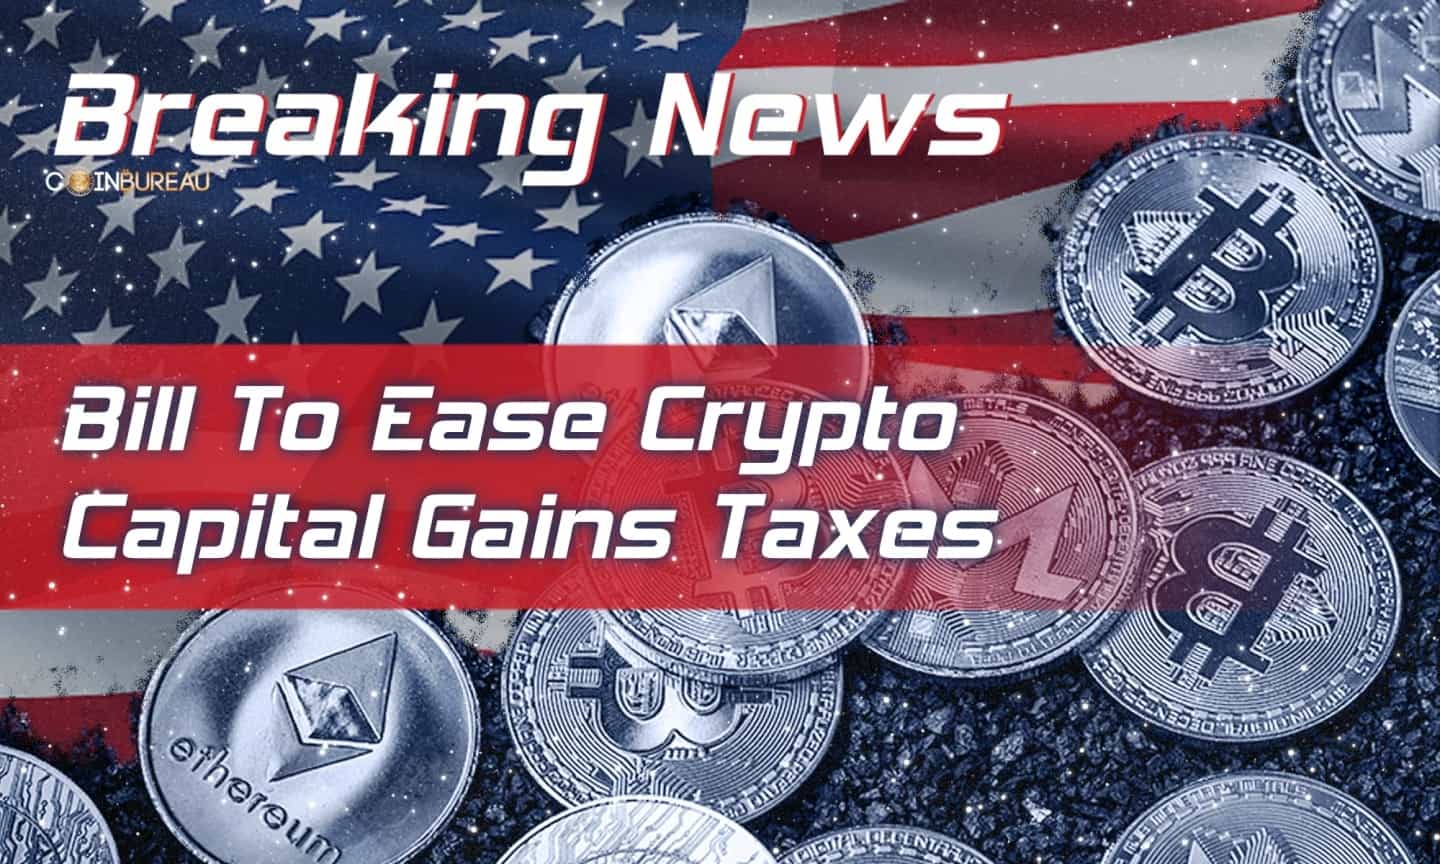 US Senators Propose Bill To Ease Crypto Capital Gains Taxes